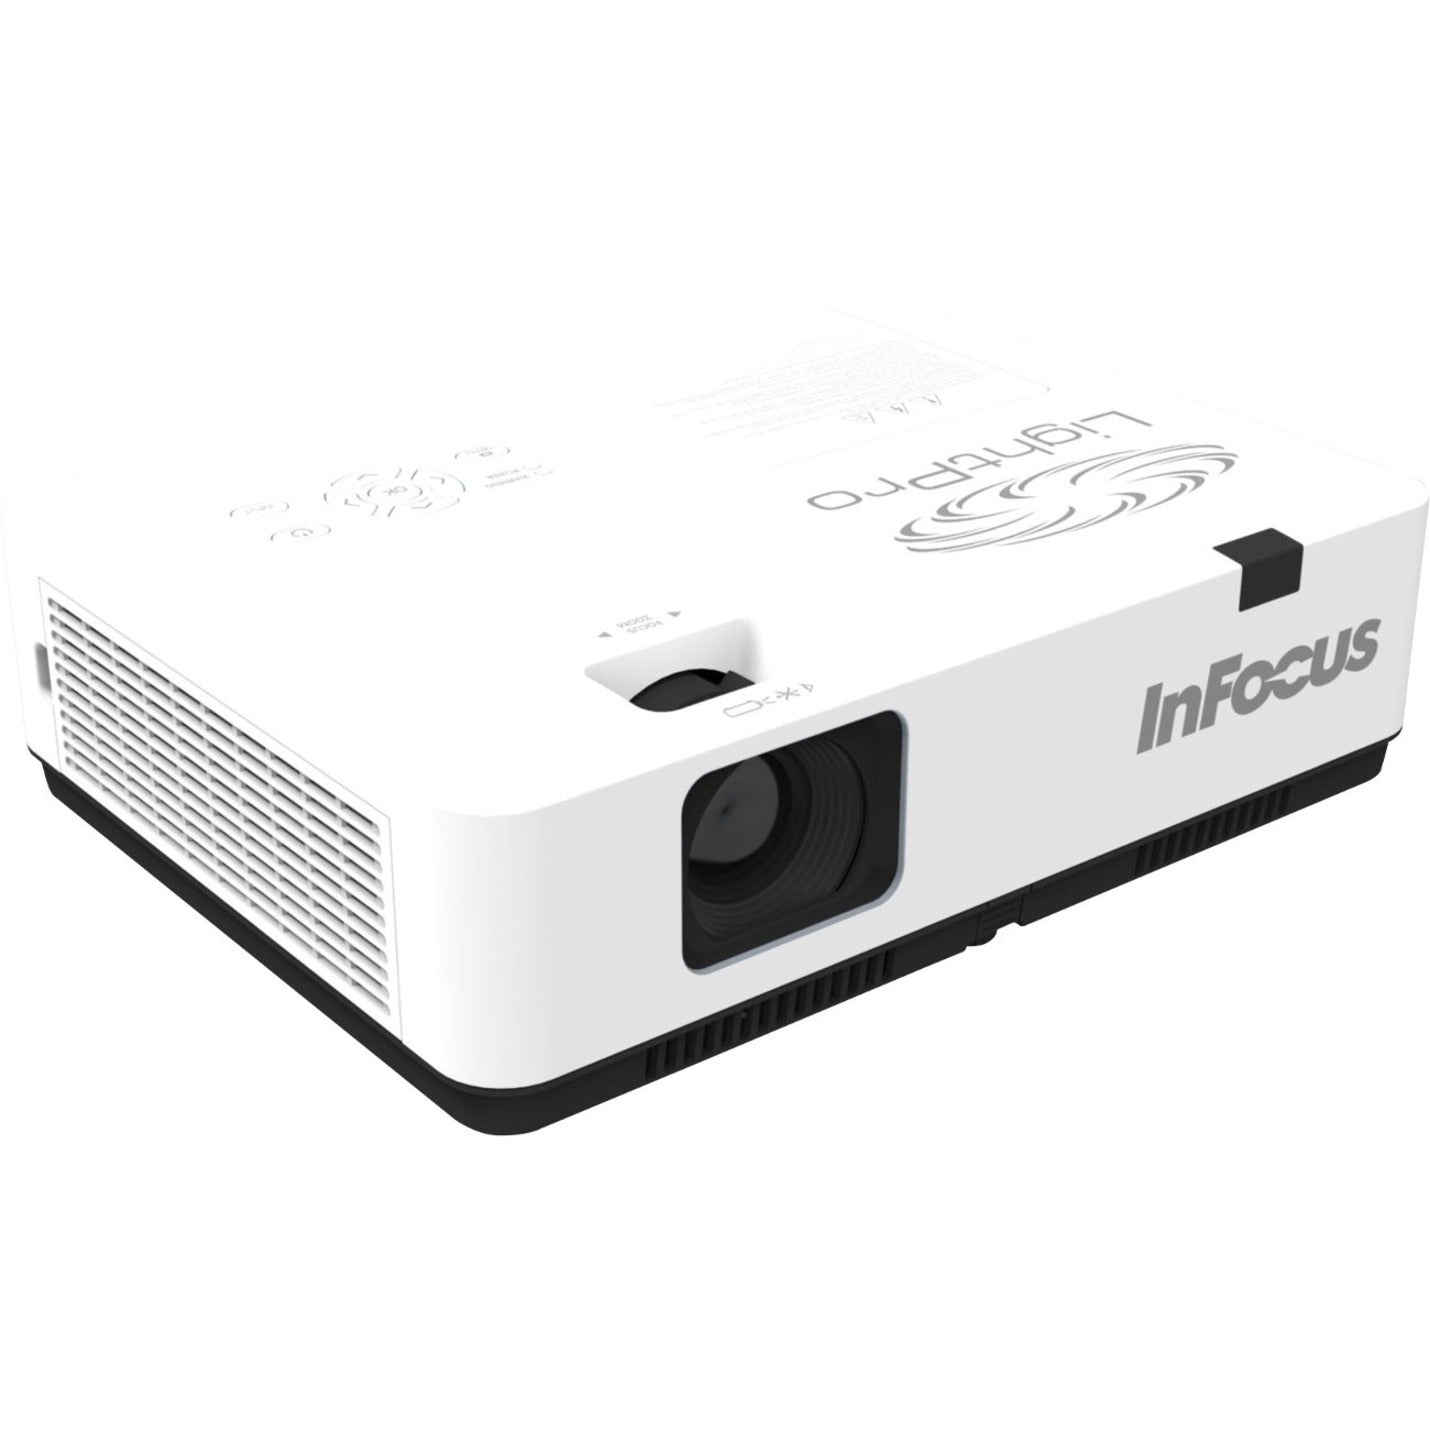 InFocus Advanced IN1014 3LCD Projector - XGA, 3400 lm, 4:3 Aspect Ratio [Discontinued]